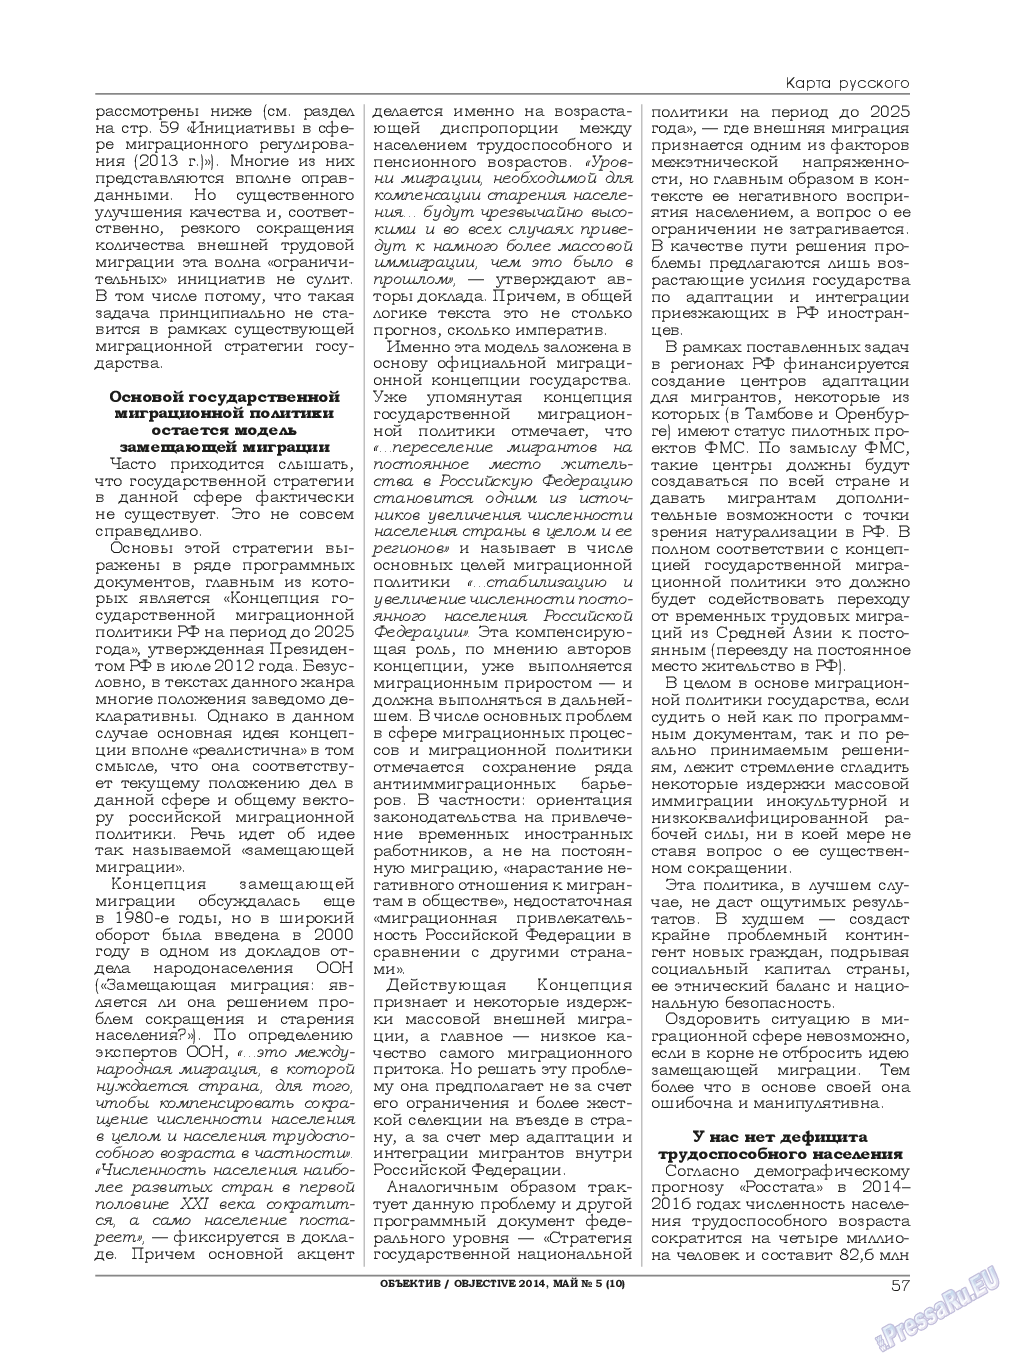 Объектив EU, журнал. 2014 №5 стр.57